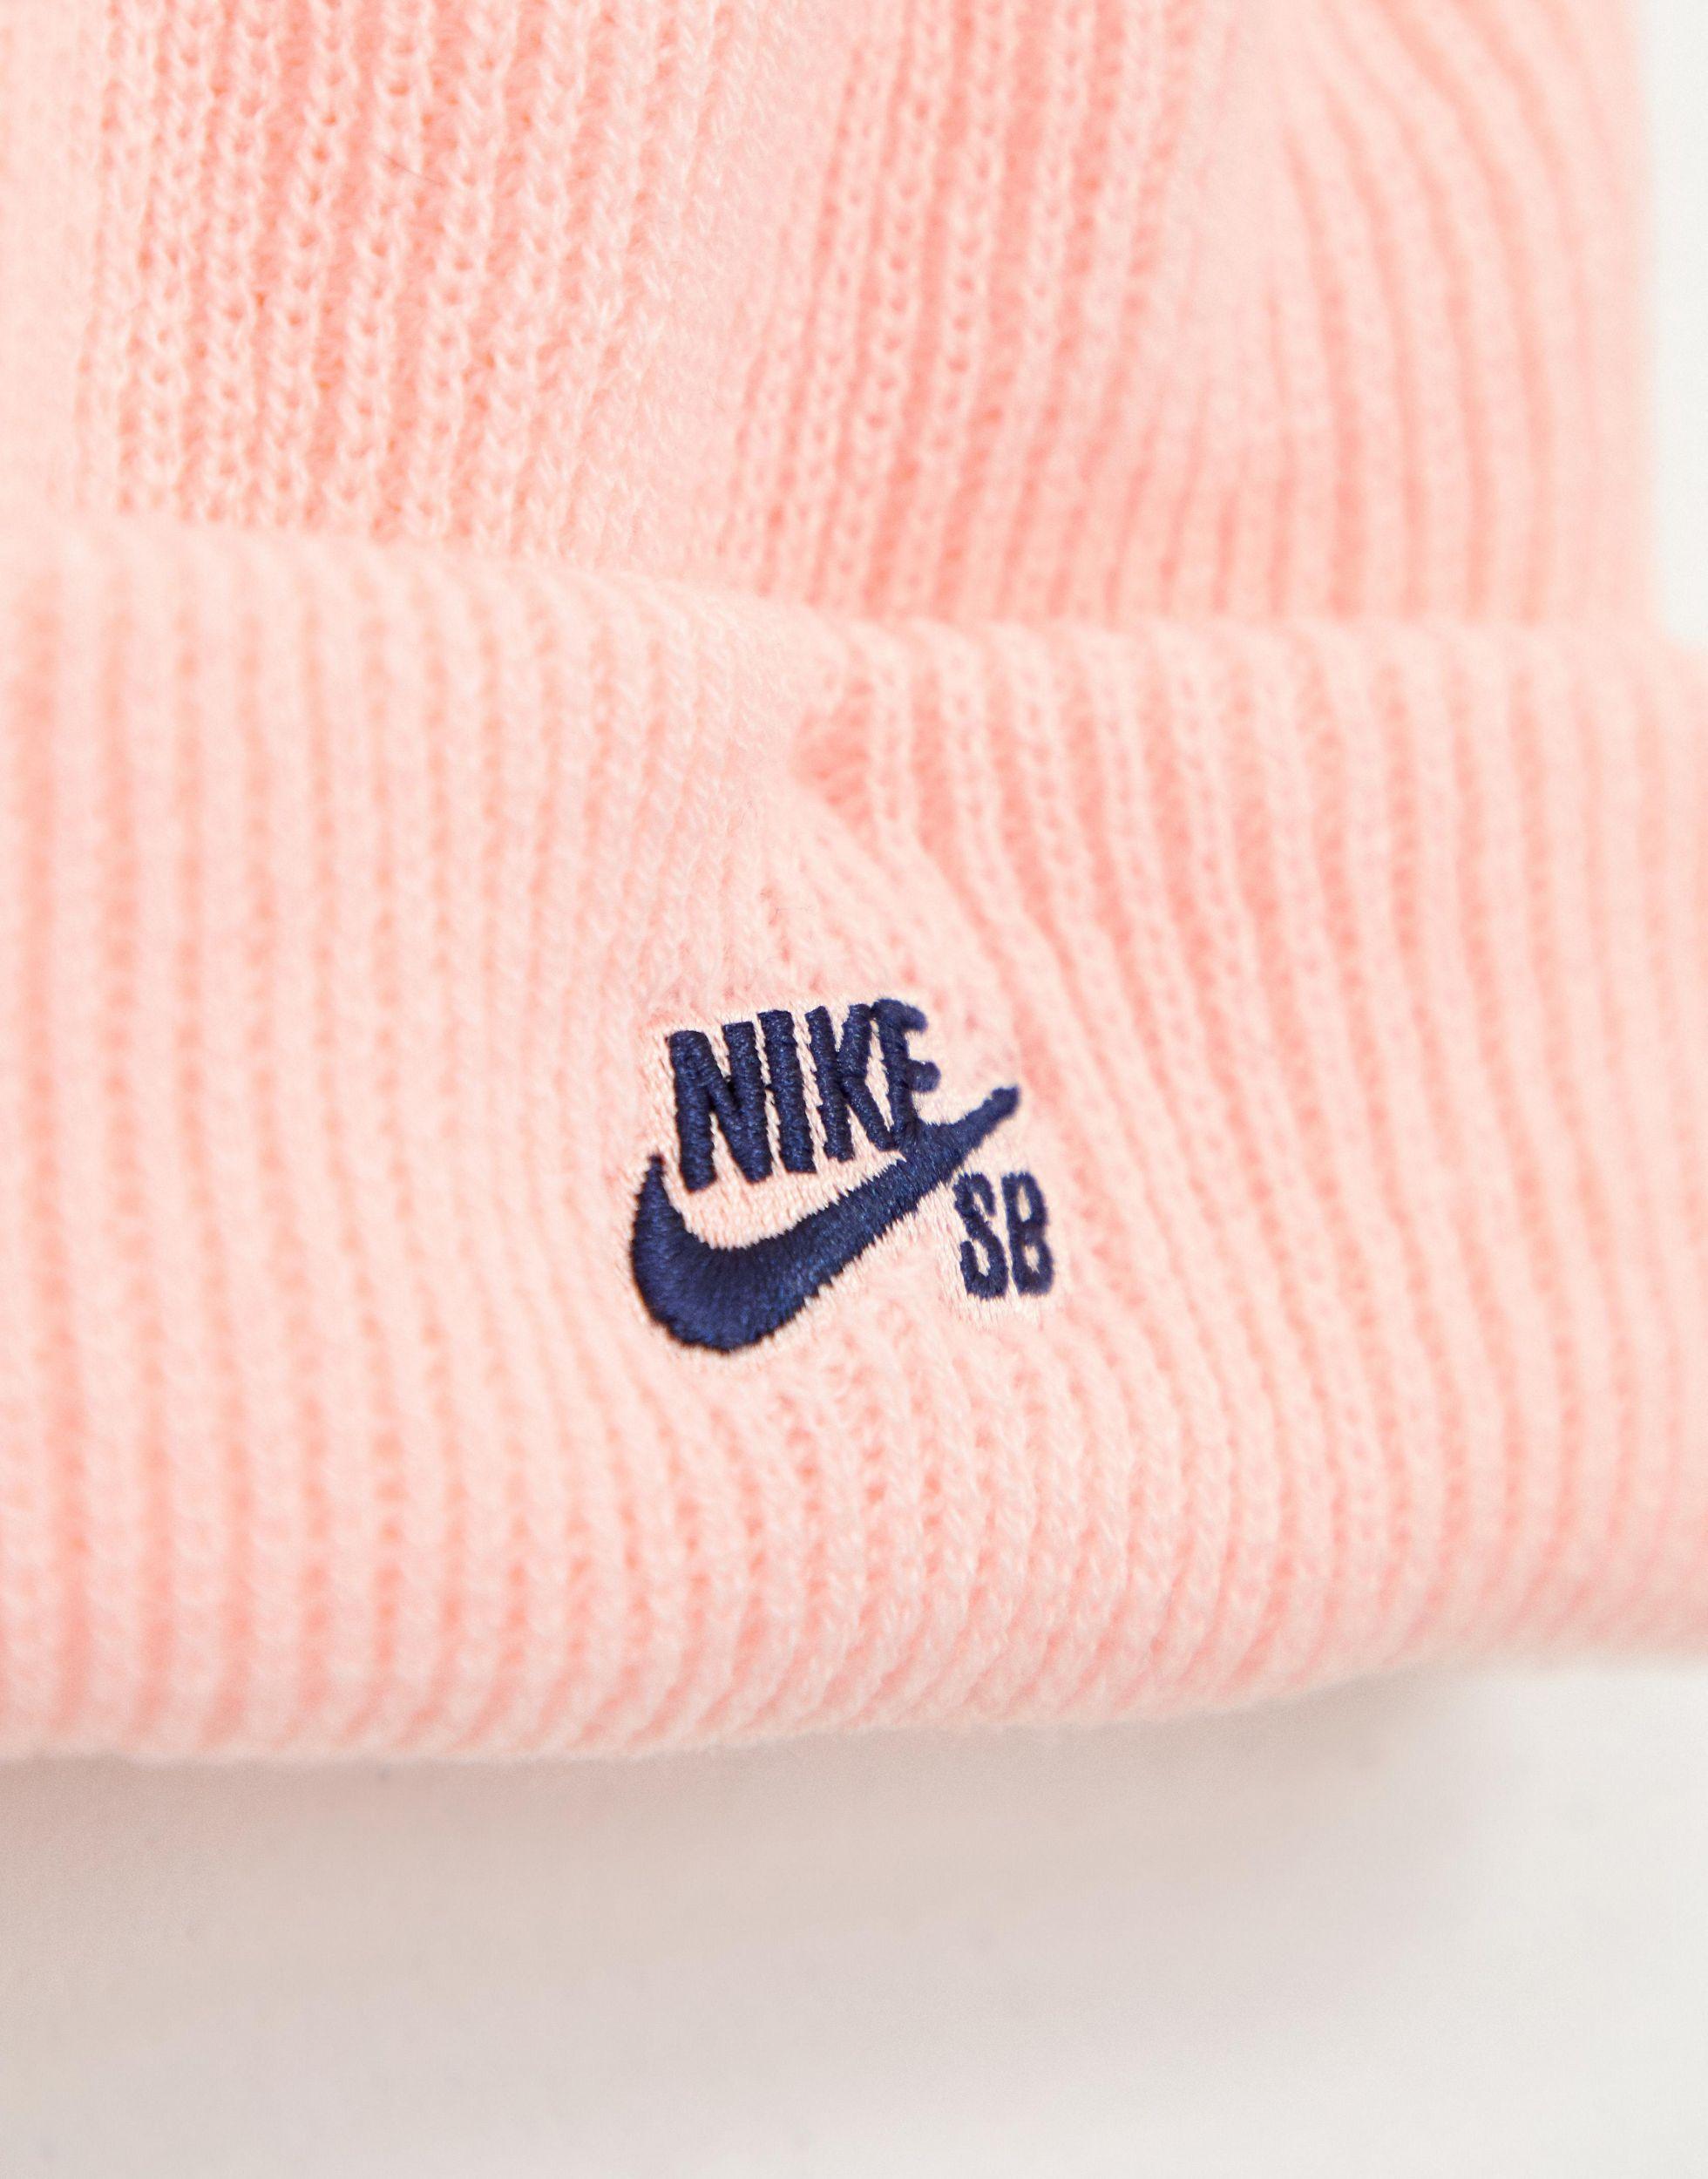 Nike Sb Fisherman Beanie Hat in Pink | Lyst Australia